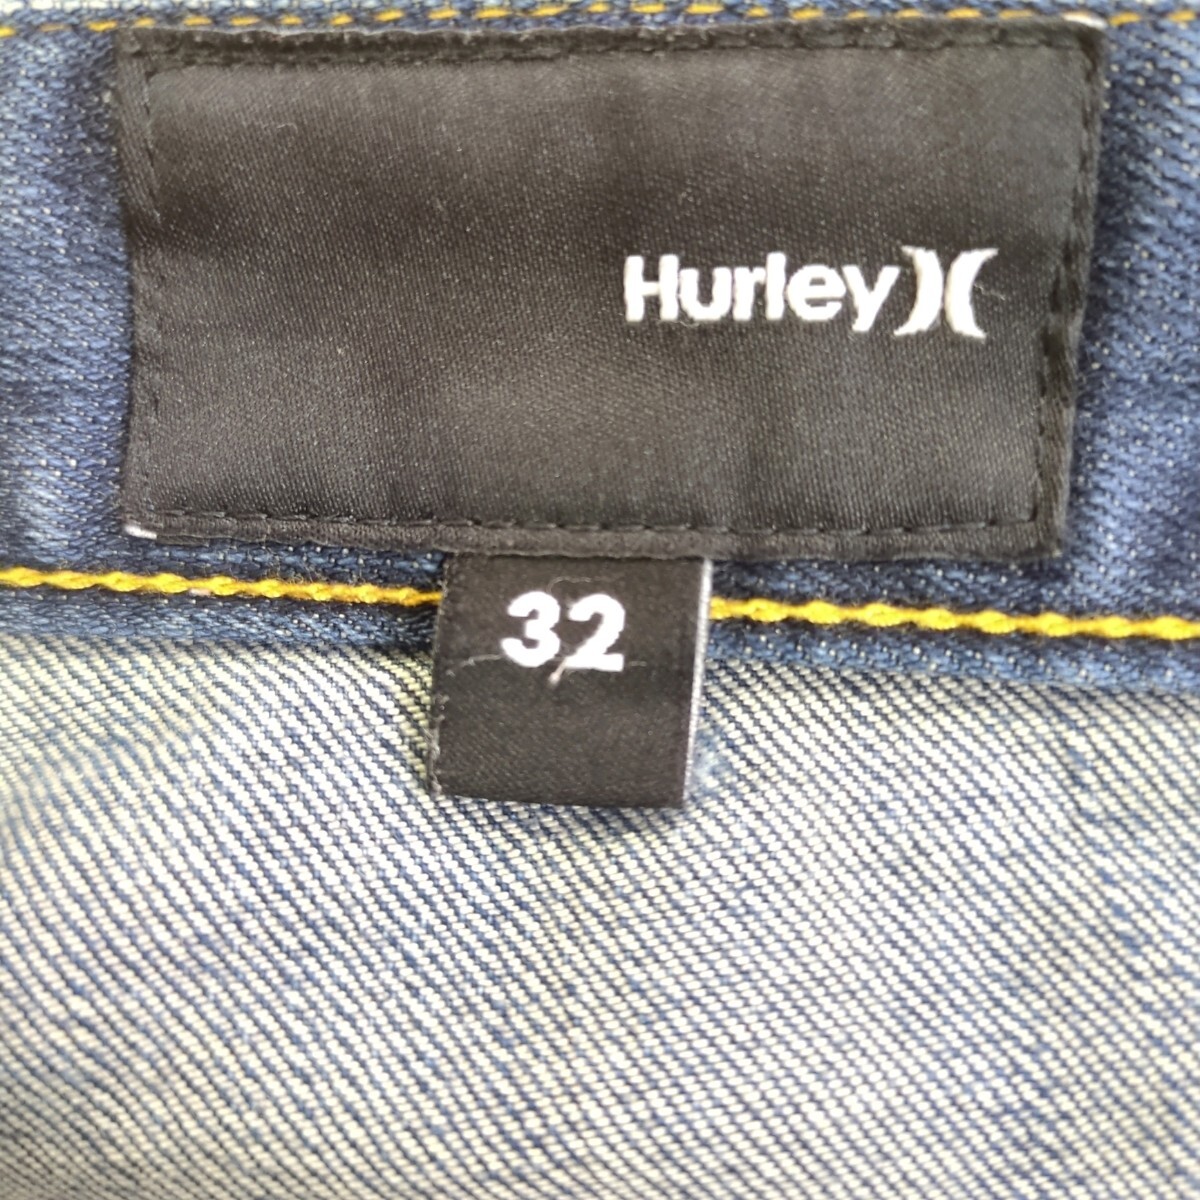 32 Hurley X デニムパンツ インディゴブルー 古着 リユース ultrampa bm0565